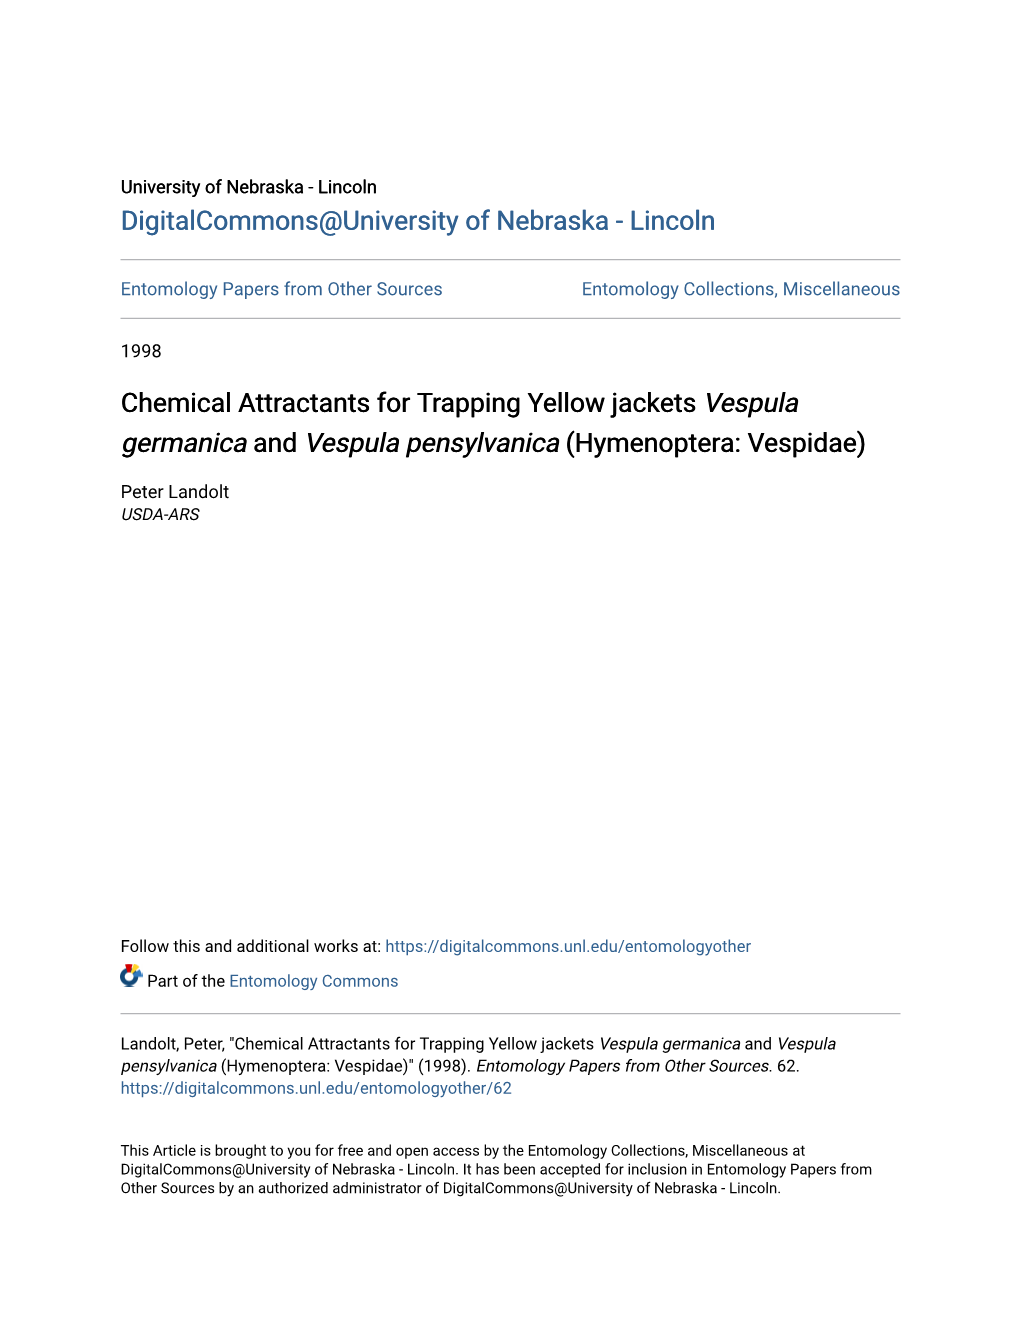 Chemical Attractants for Trapping Yellow Jackets Vespula Germanica and Vespula Pensylvanica (Hymenoptera: Vespidae)